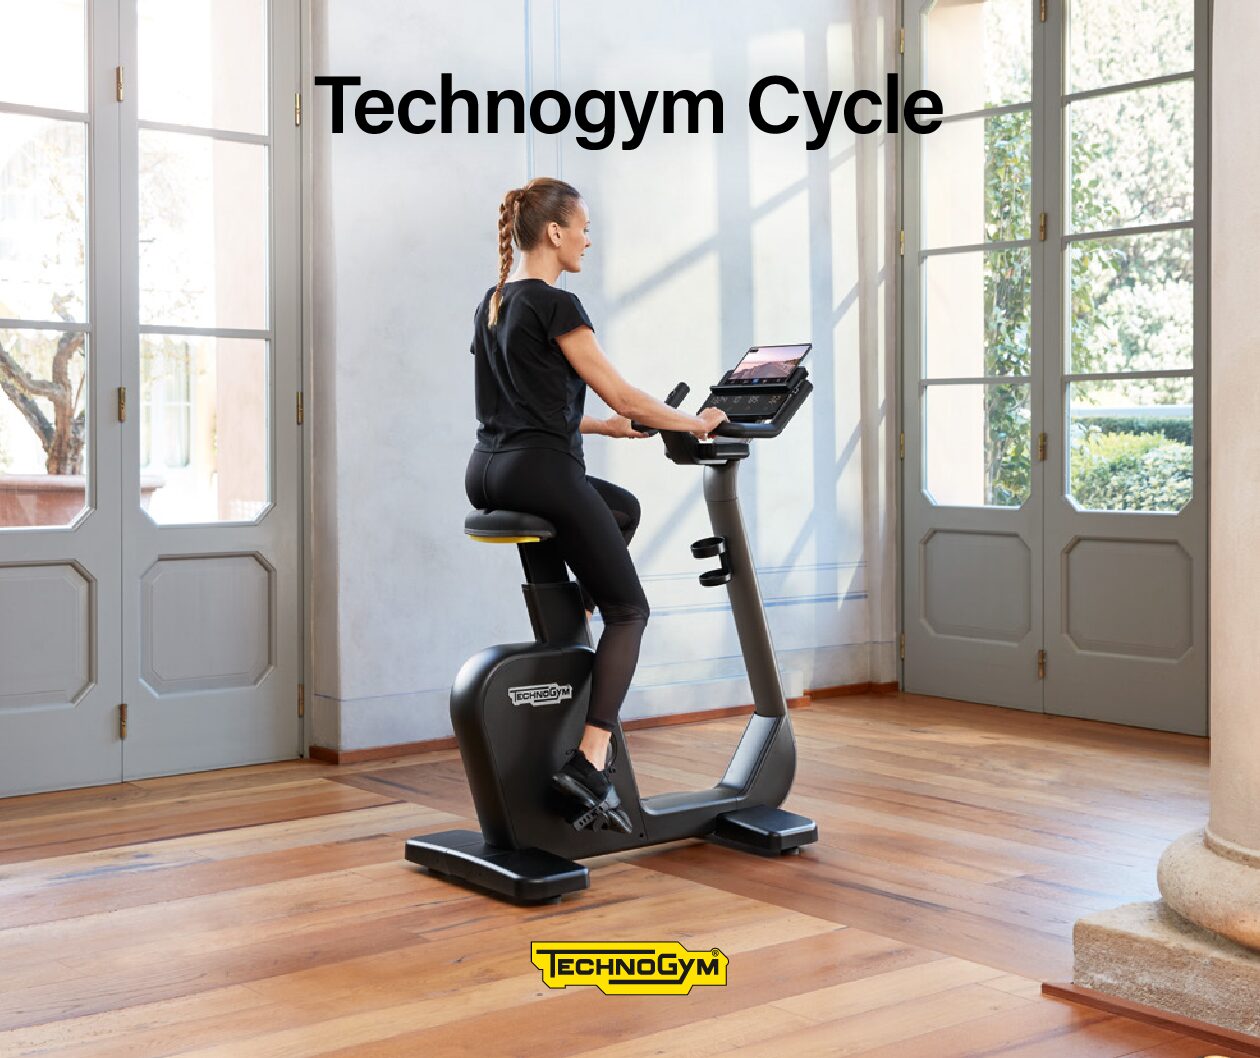 Technogym Cycle Catalogue